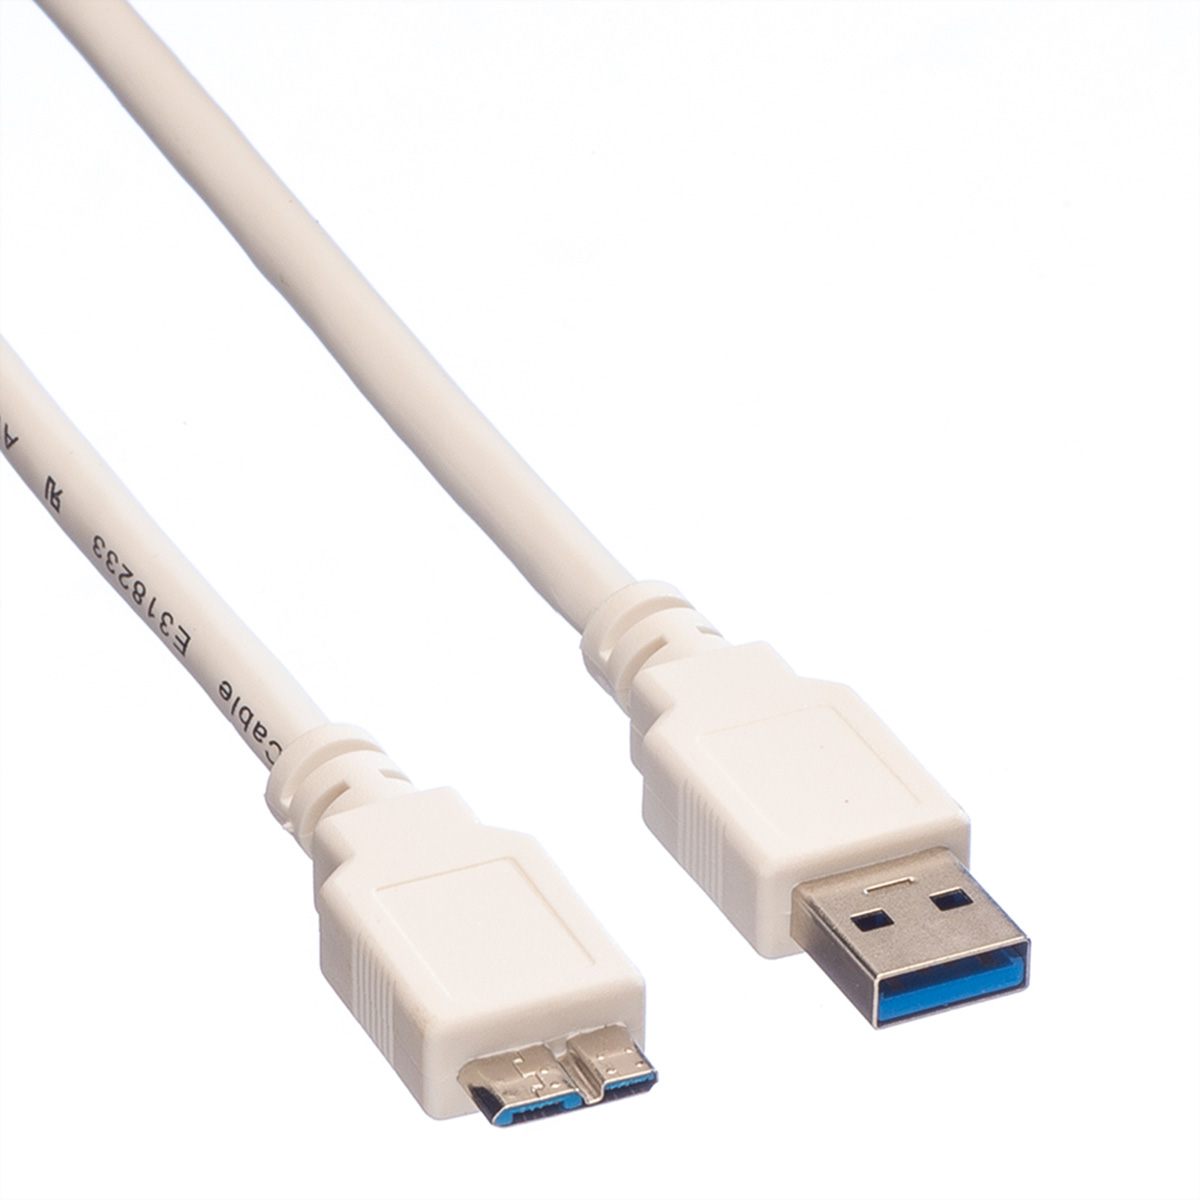 B 3.2 Gen USB 1 Micro A - Kabel, Kabel USB Micro VALUE ST 3.2 ST